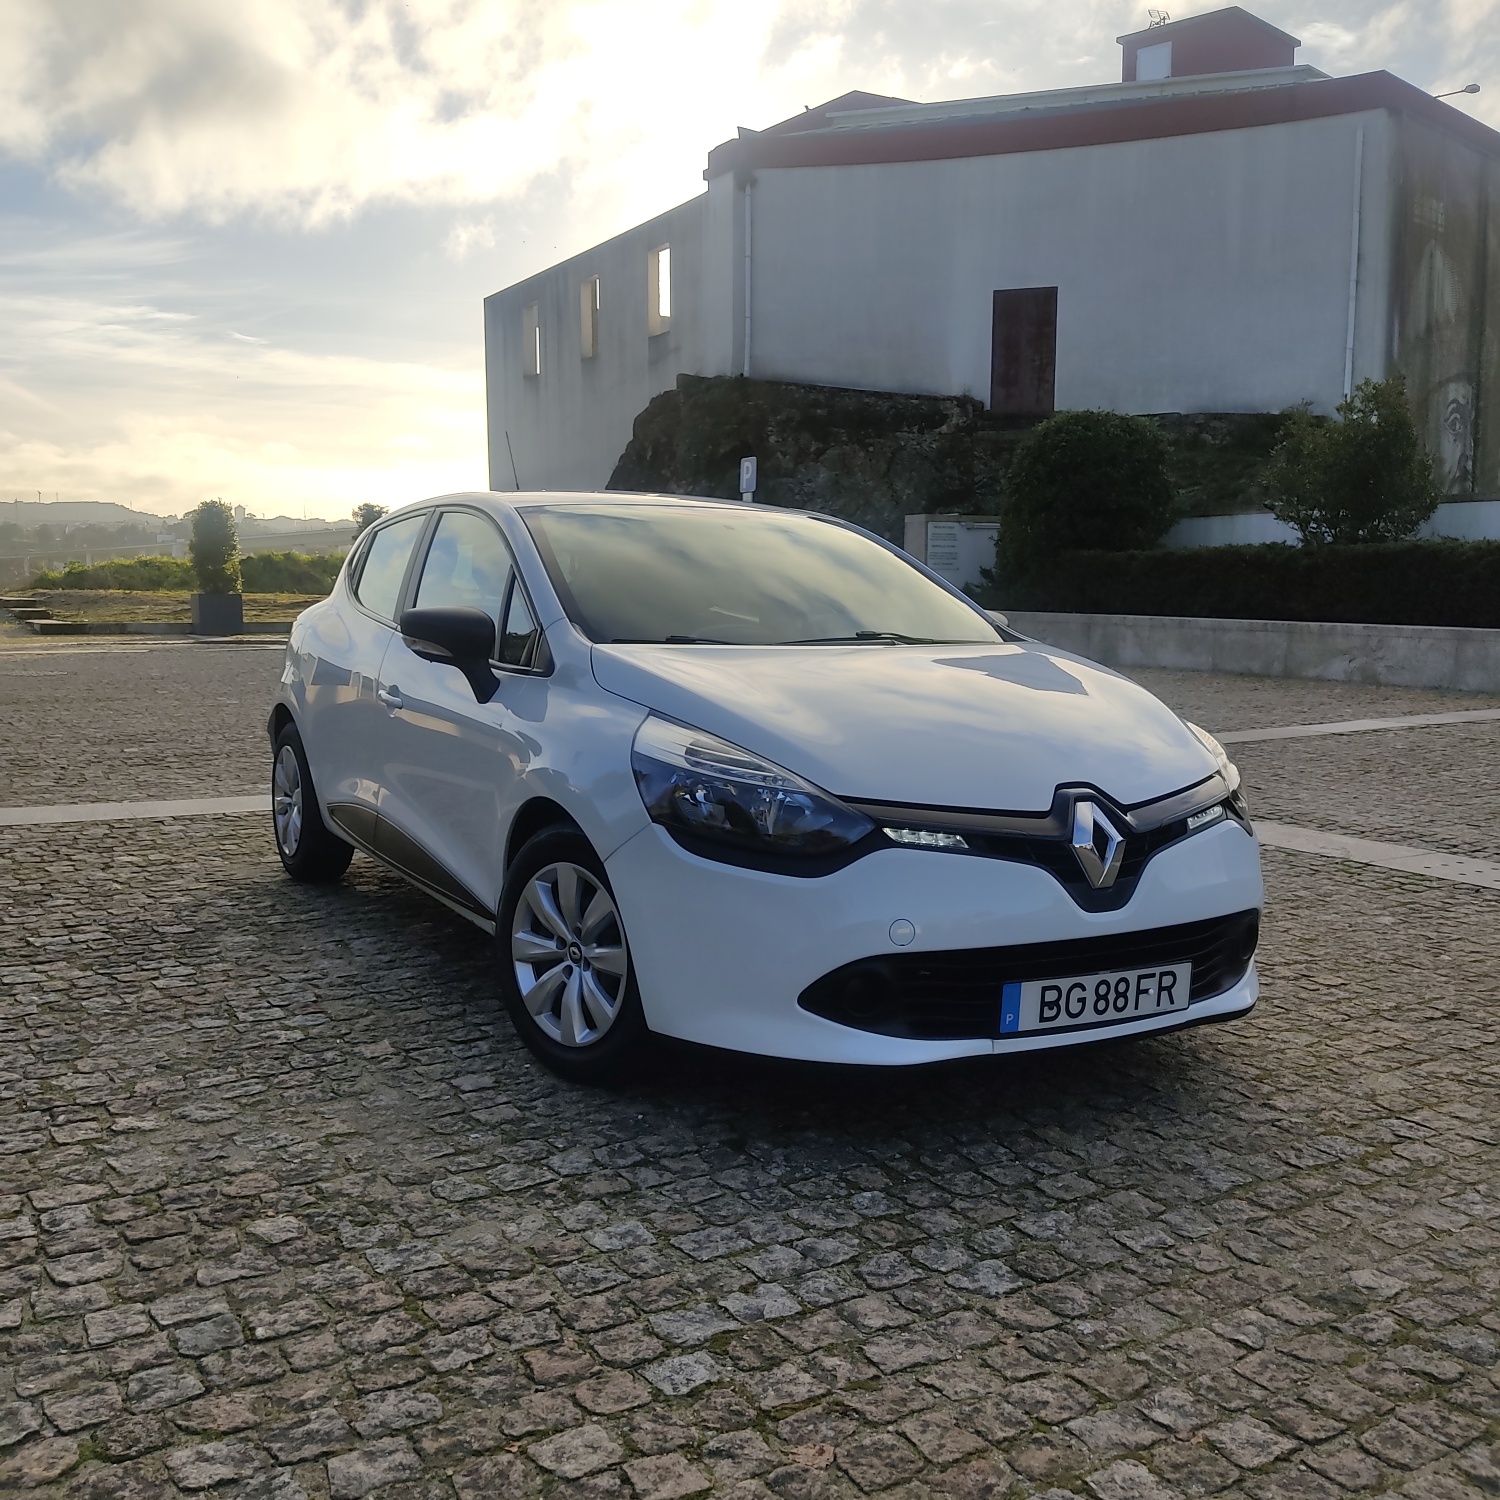 Renault Clio 1.2 - Perfeito estado